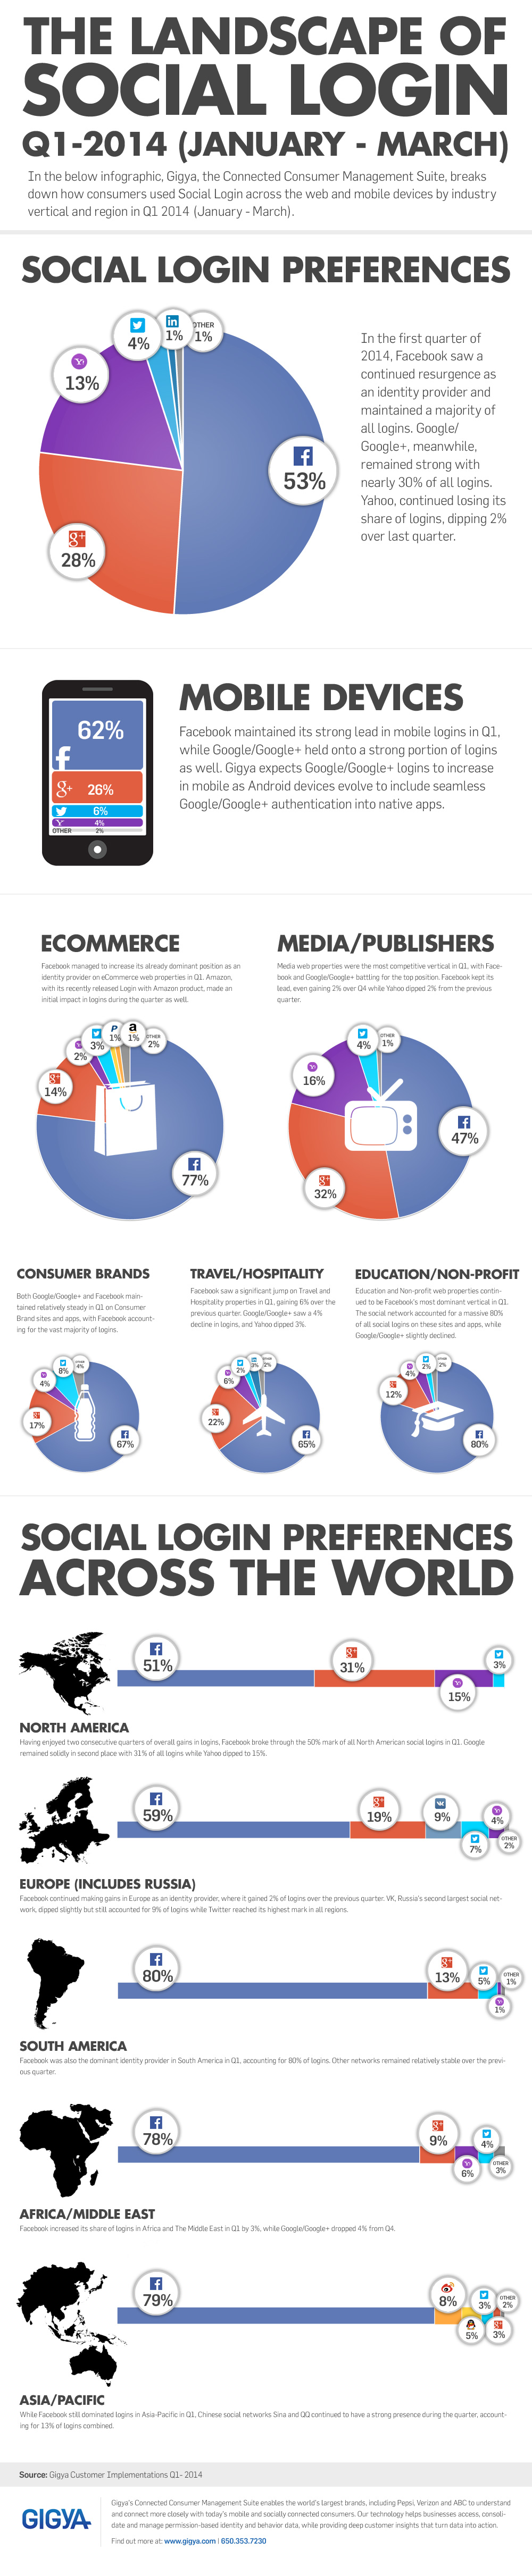 Social Login Infographic_Q12014